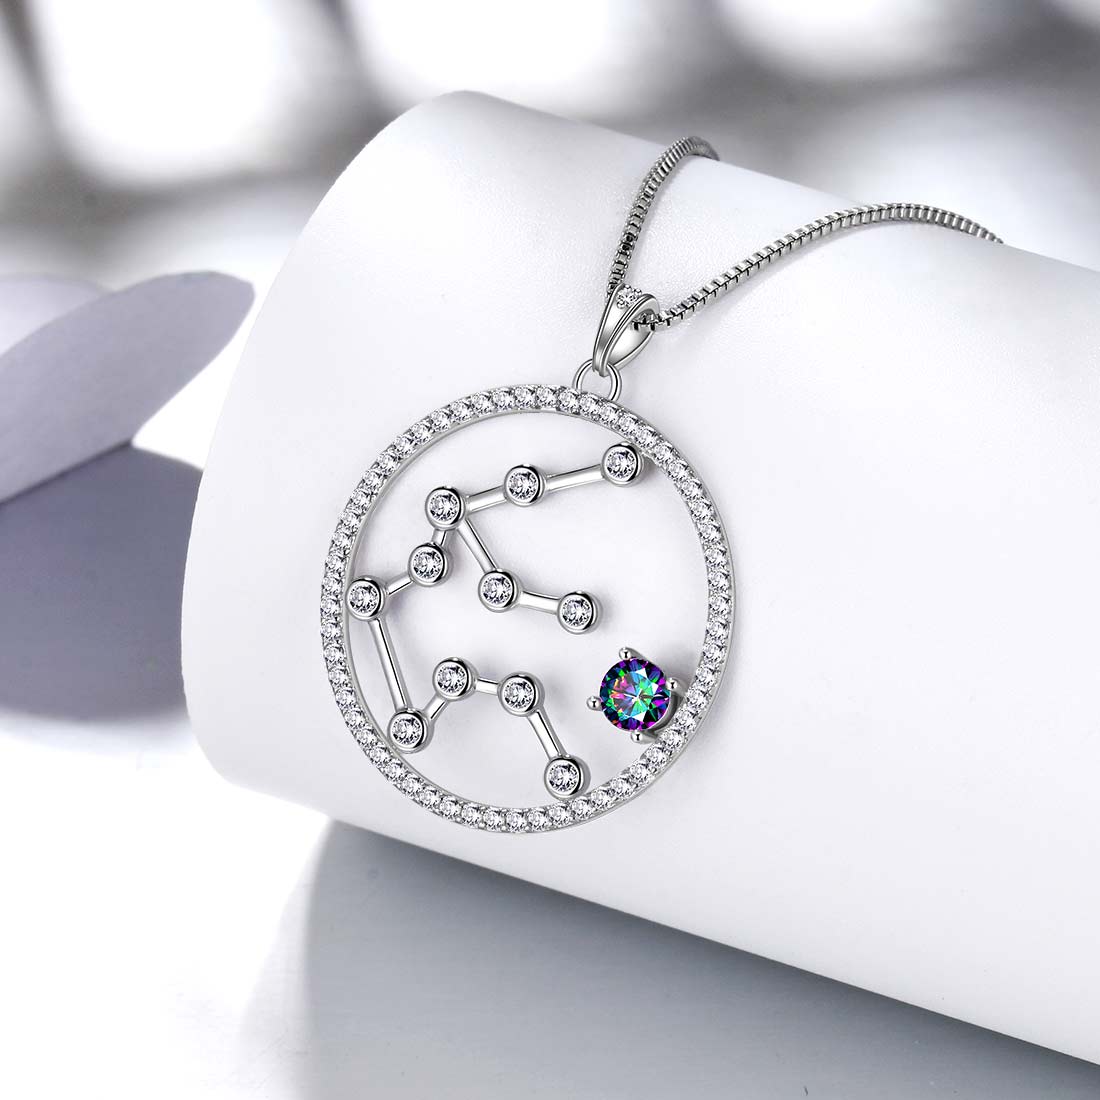 Aquarius Zodiac Necklace 925 Sterling Silver - Necklaces - Aurora Tears Jewelry